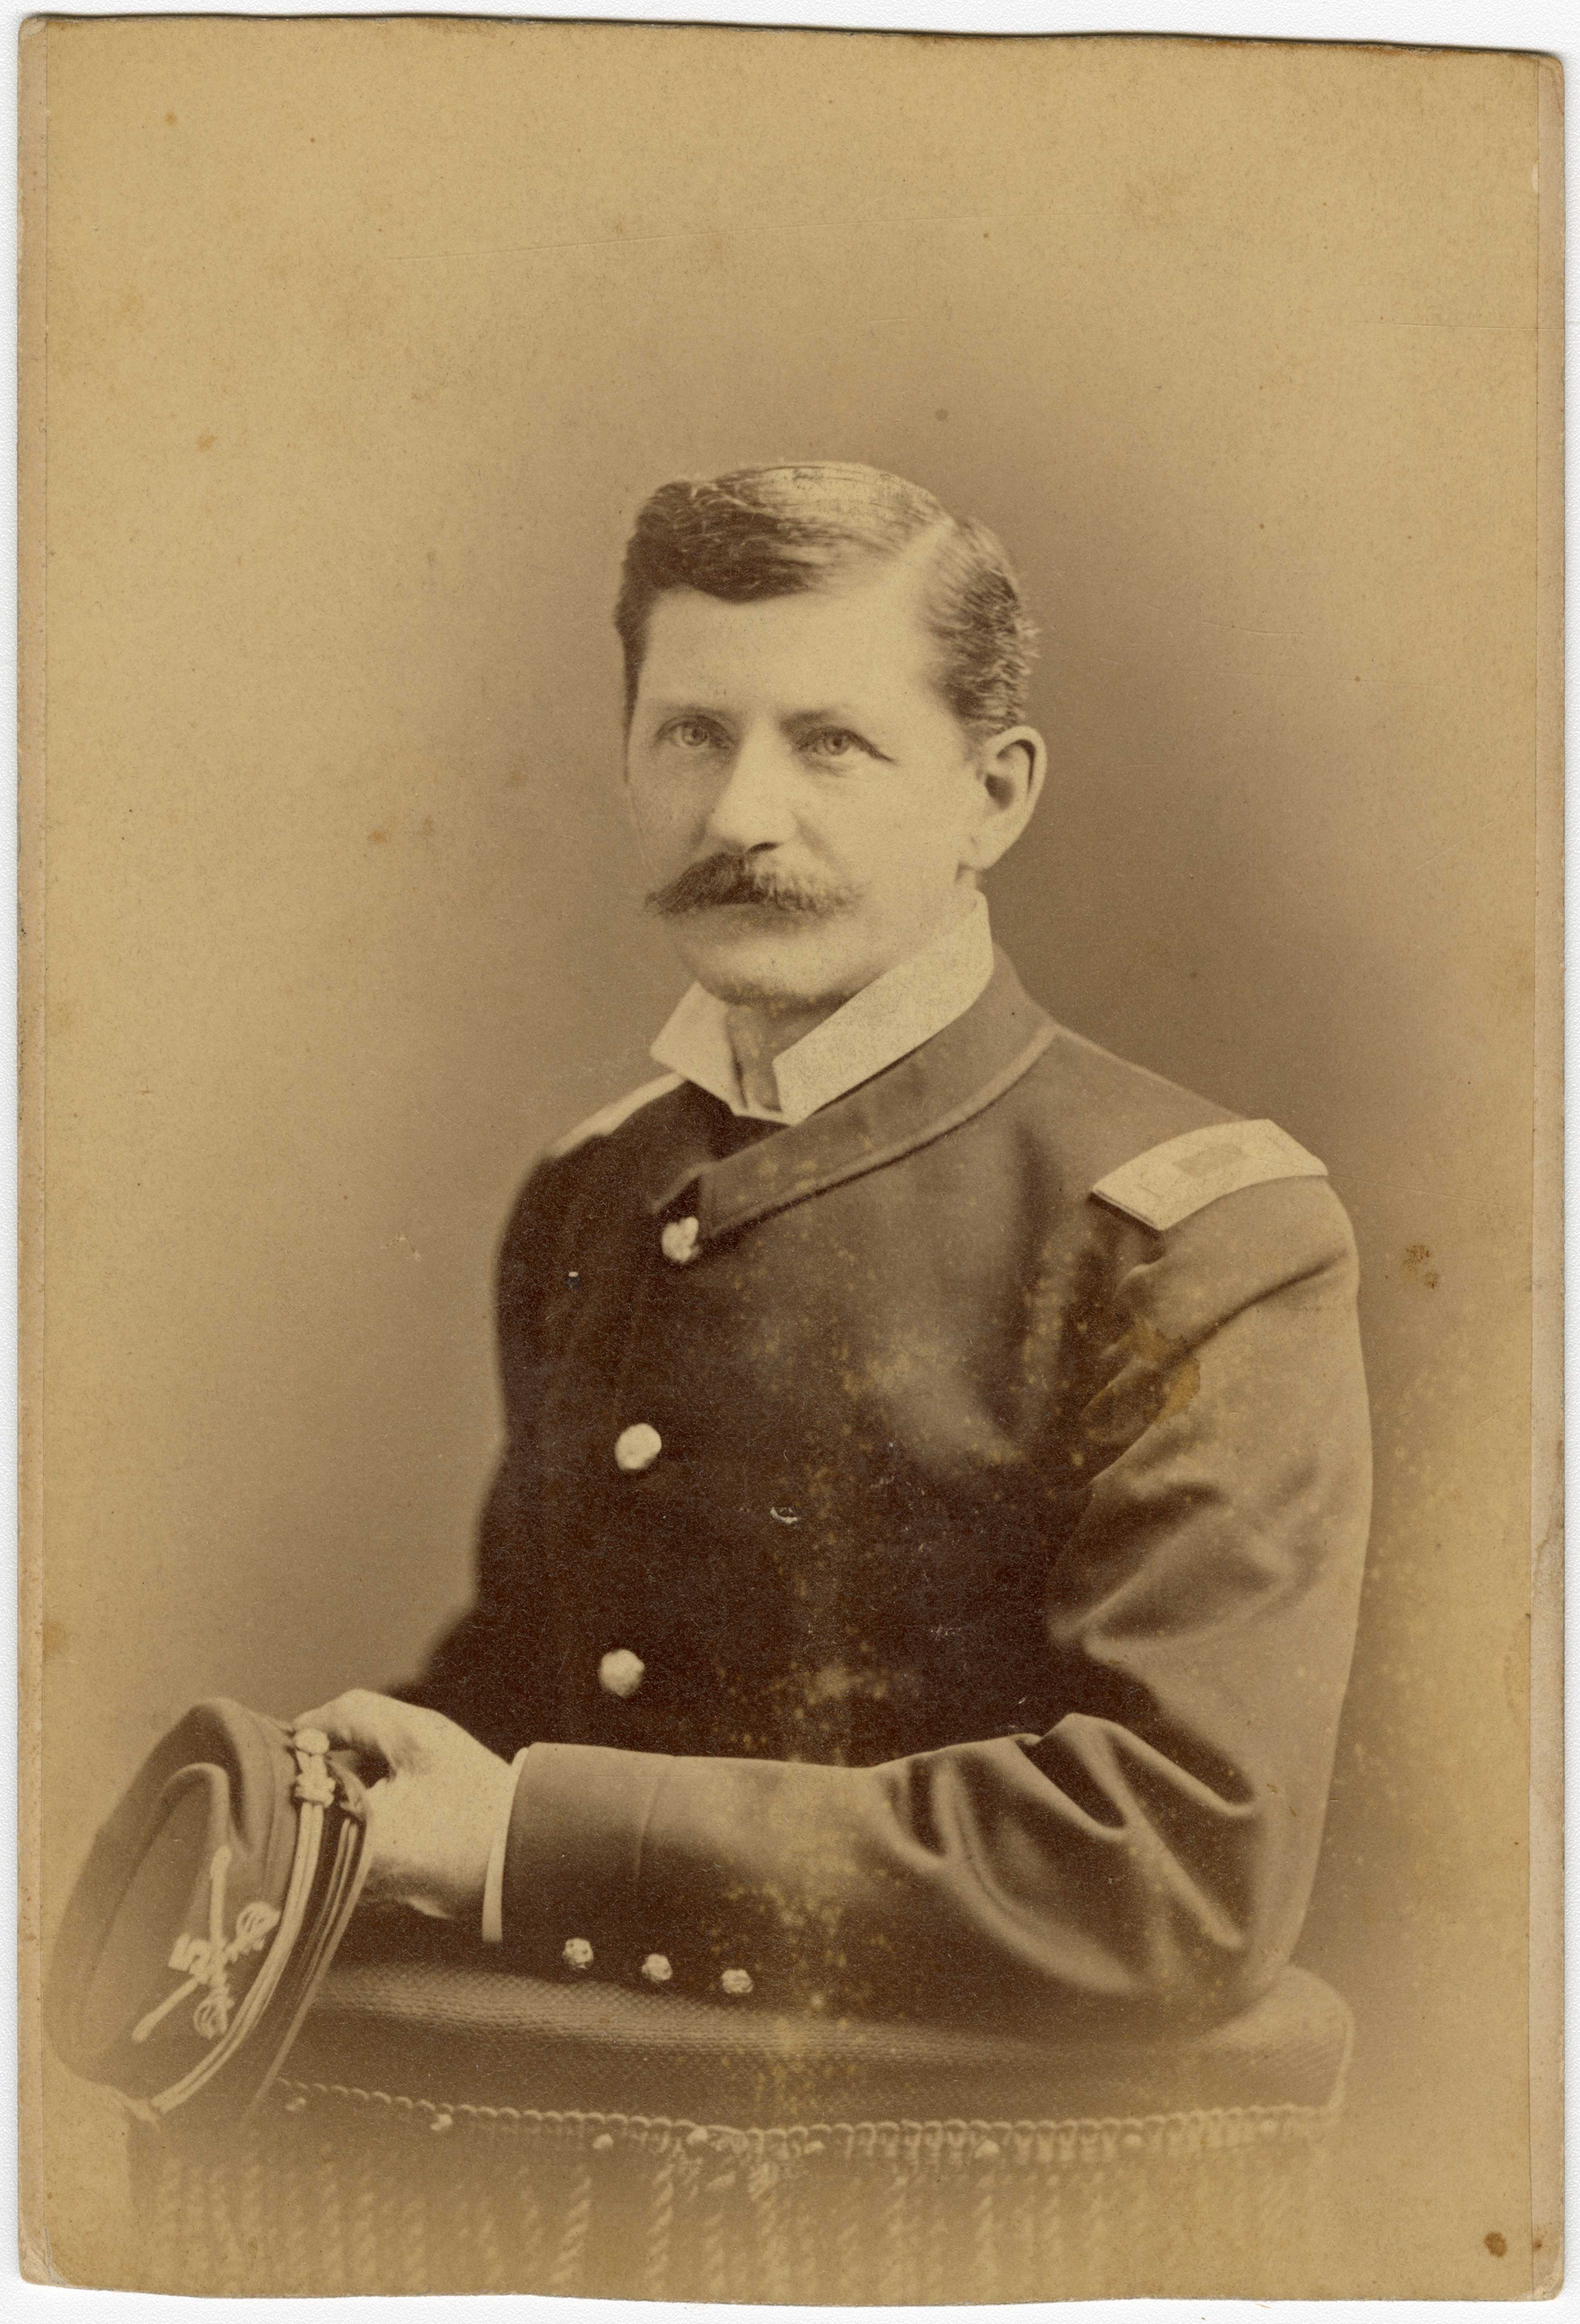 [Studio portrait of Captain John M. Hamilton in 5th Cavalry uniform]